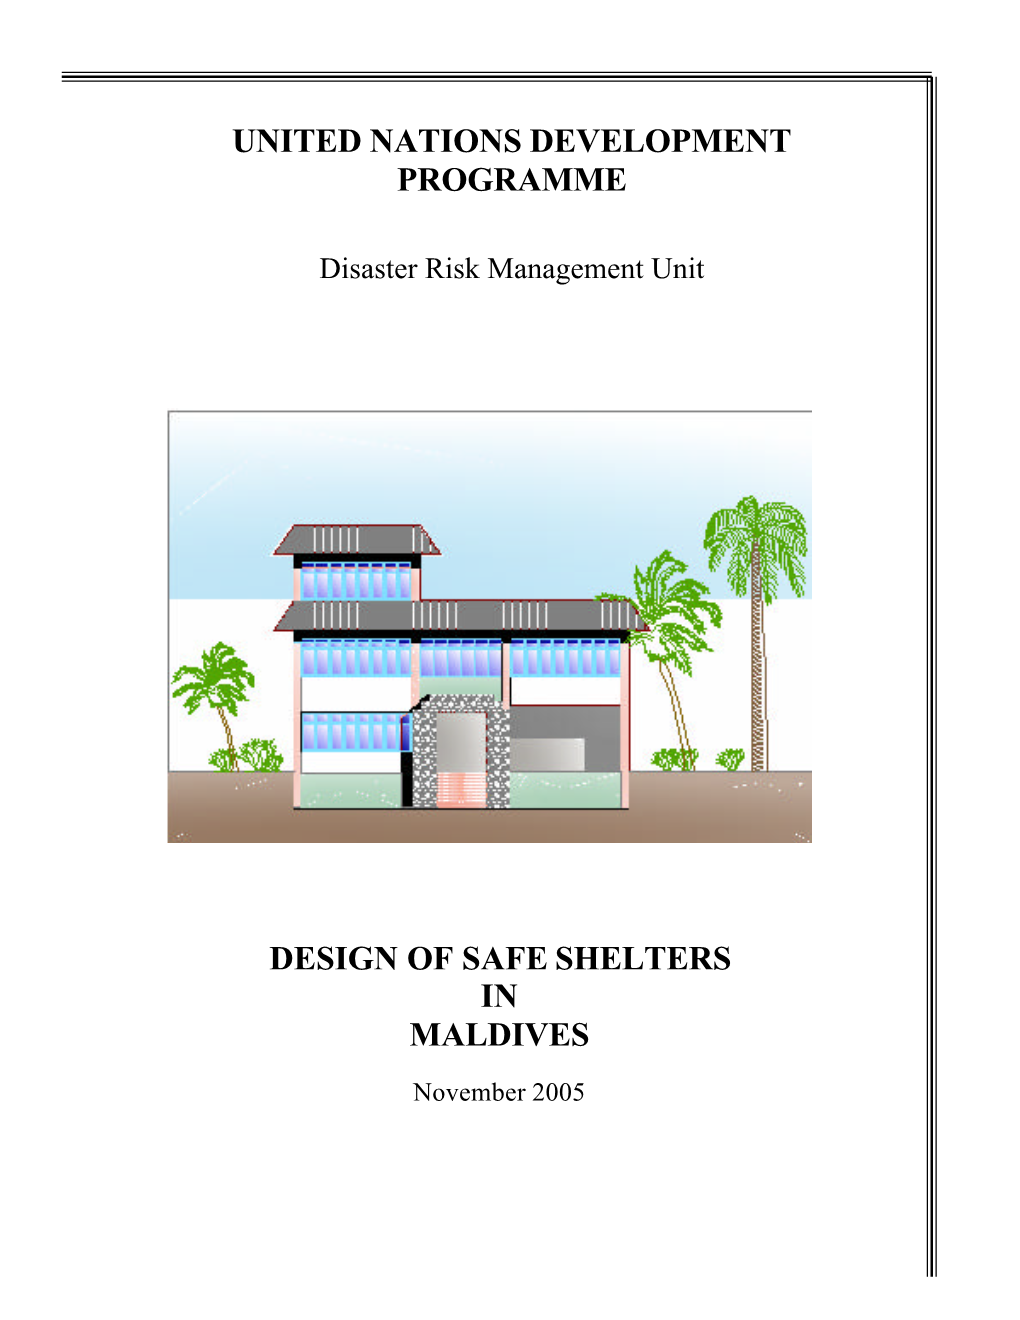 United Nations Development Programme Design of Safe Shelters in Maldives